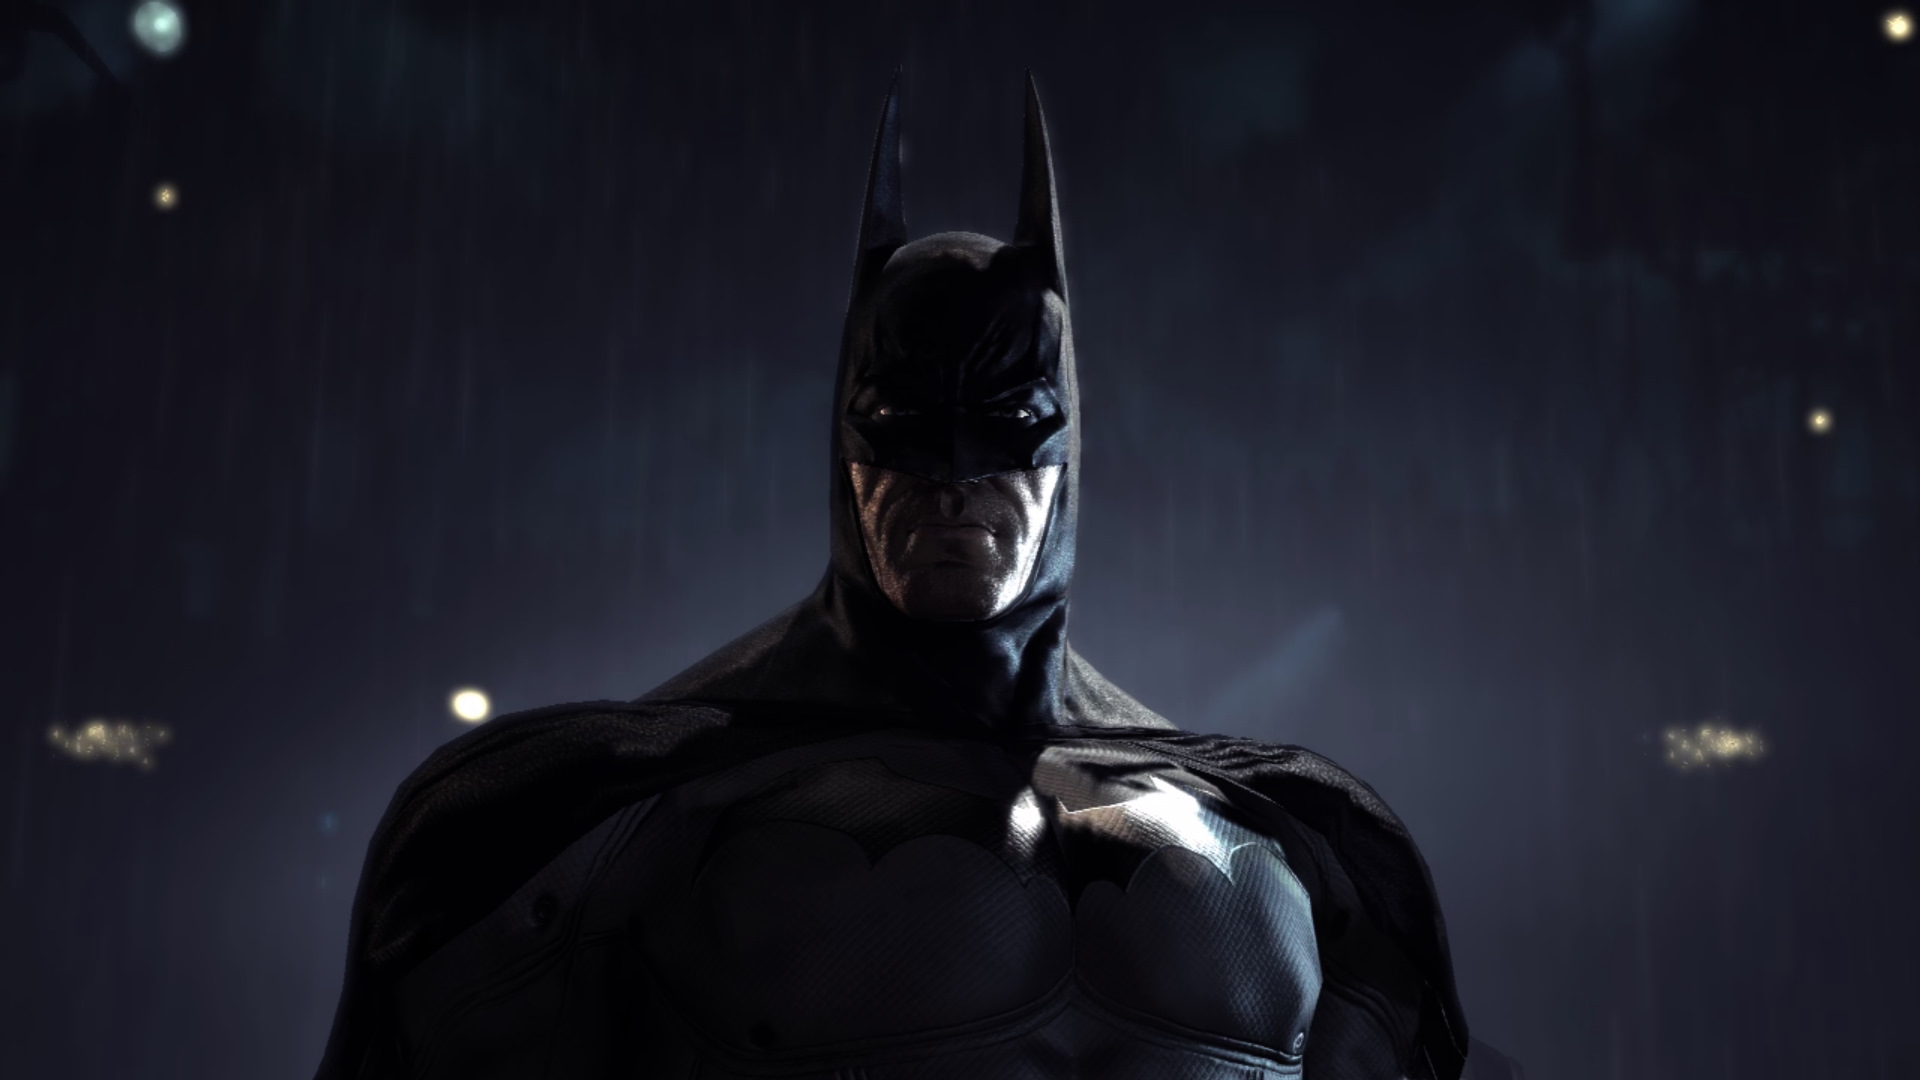 Batman Presentation Backgrounds for Powerpoint Templates - PPT Backgrounds